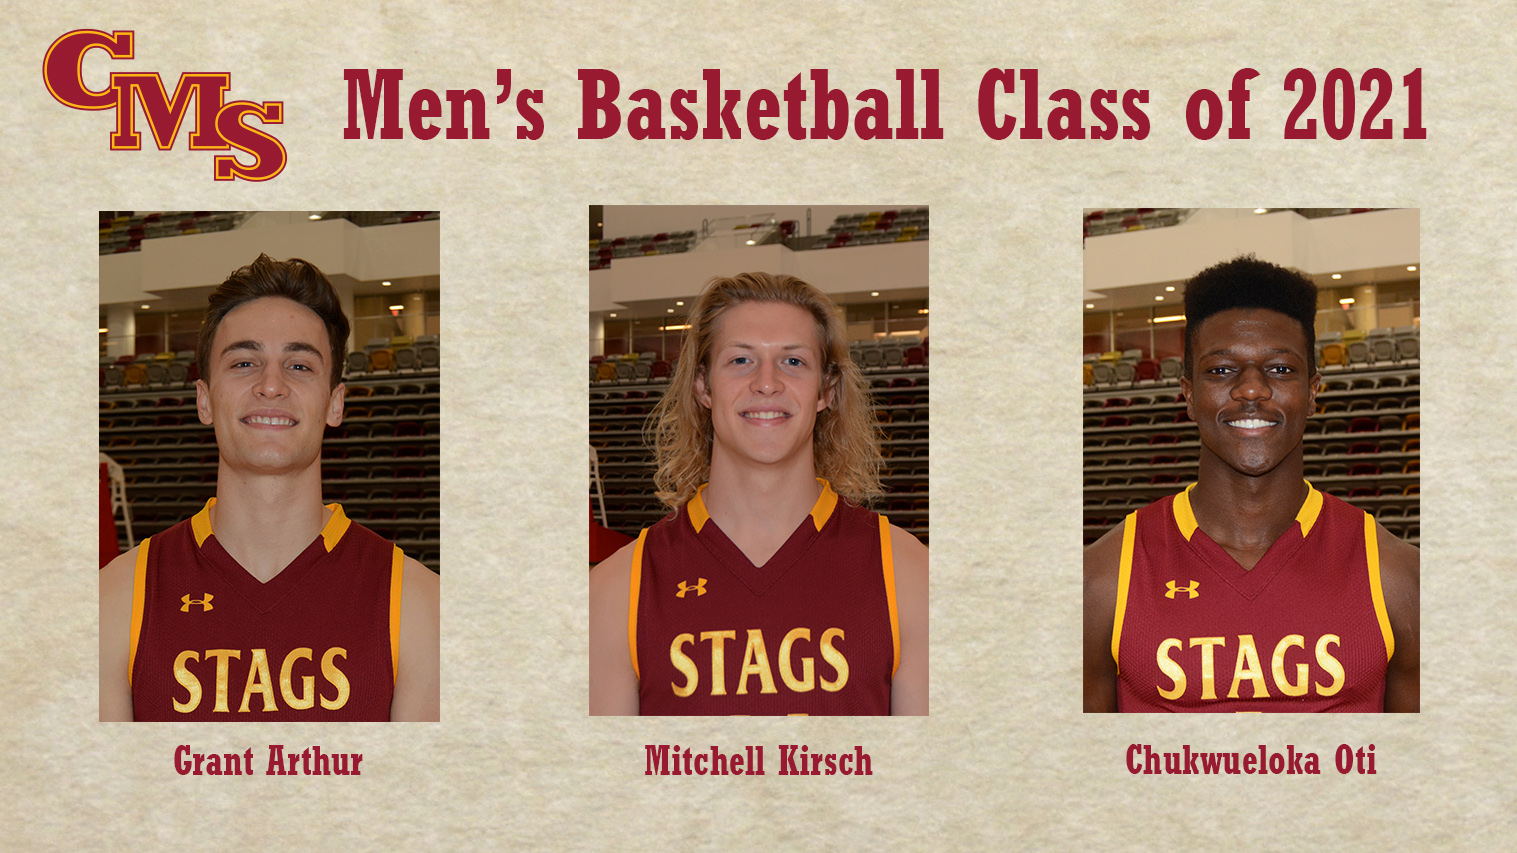 Head Shots of the CMS Men's Basketball Class of 2021